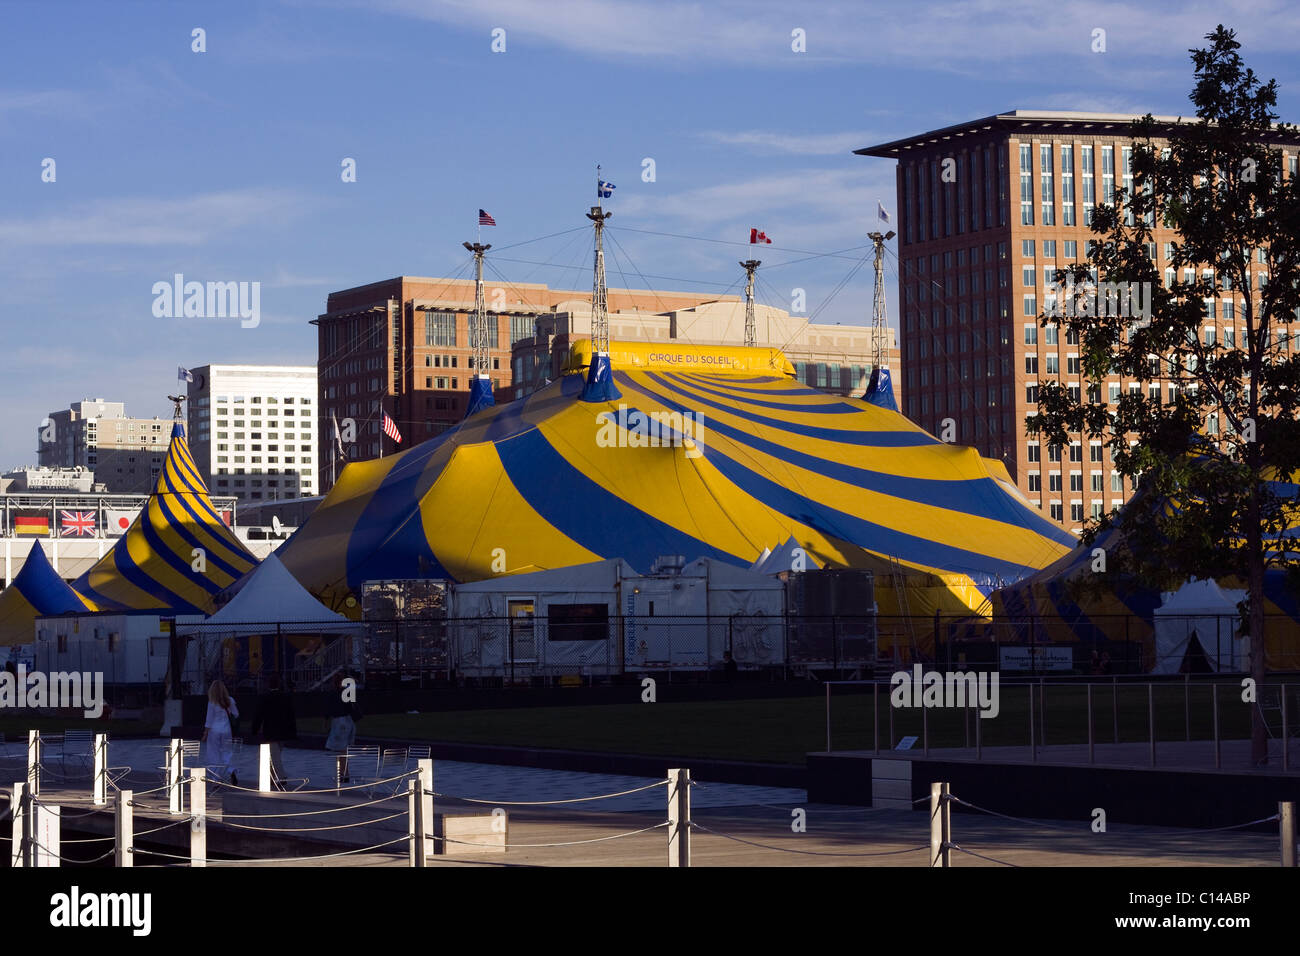 Cirque Du Soleil Tent at Fan Pier in Boston, Massachusetts. Stock Photo